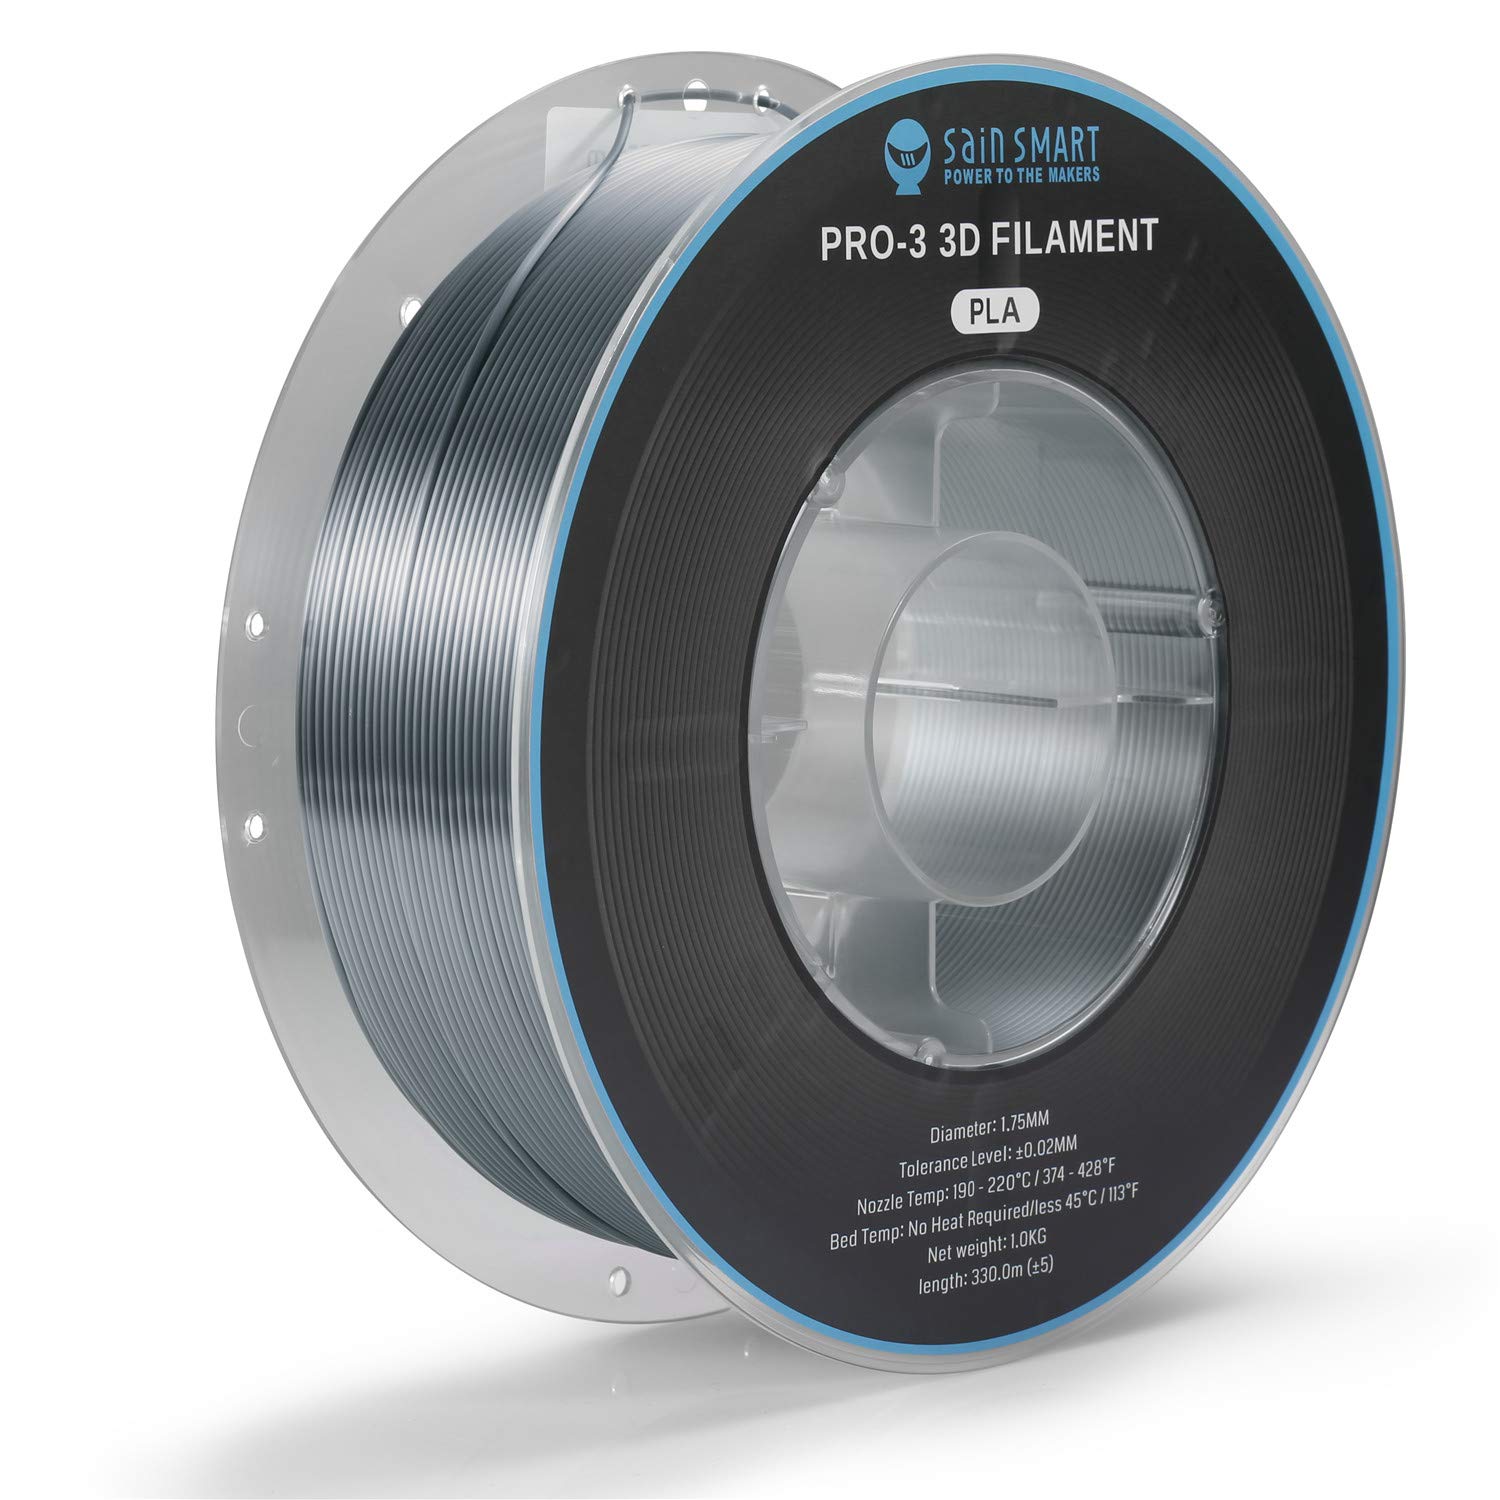 SainSmart Silk PLA Filament, PRO-3 Tangle-Free Premium 1.75mm 3D Printer Filament,Dimensional Accuracy +/- 0.02 mm, 1KG/2.2 LBS Spool, Silk Silver